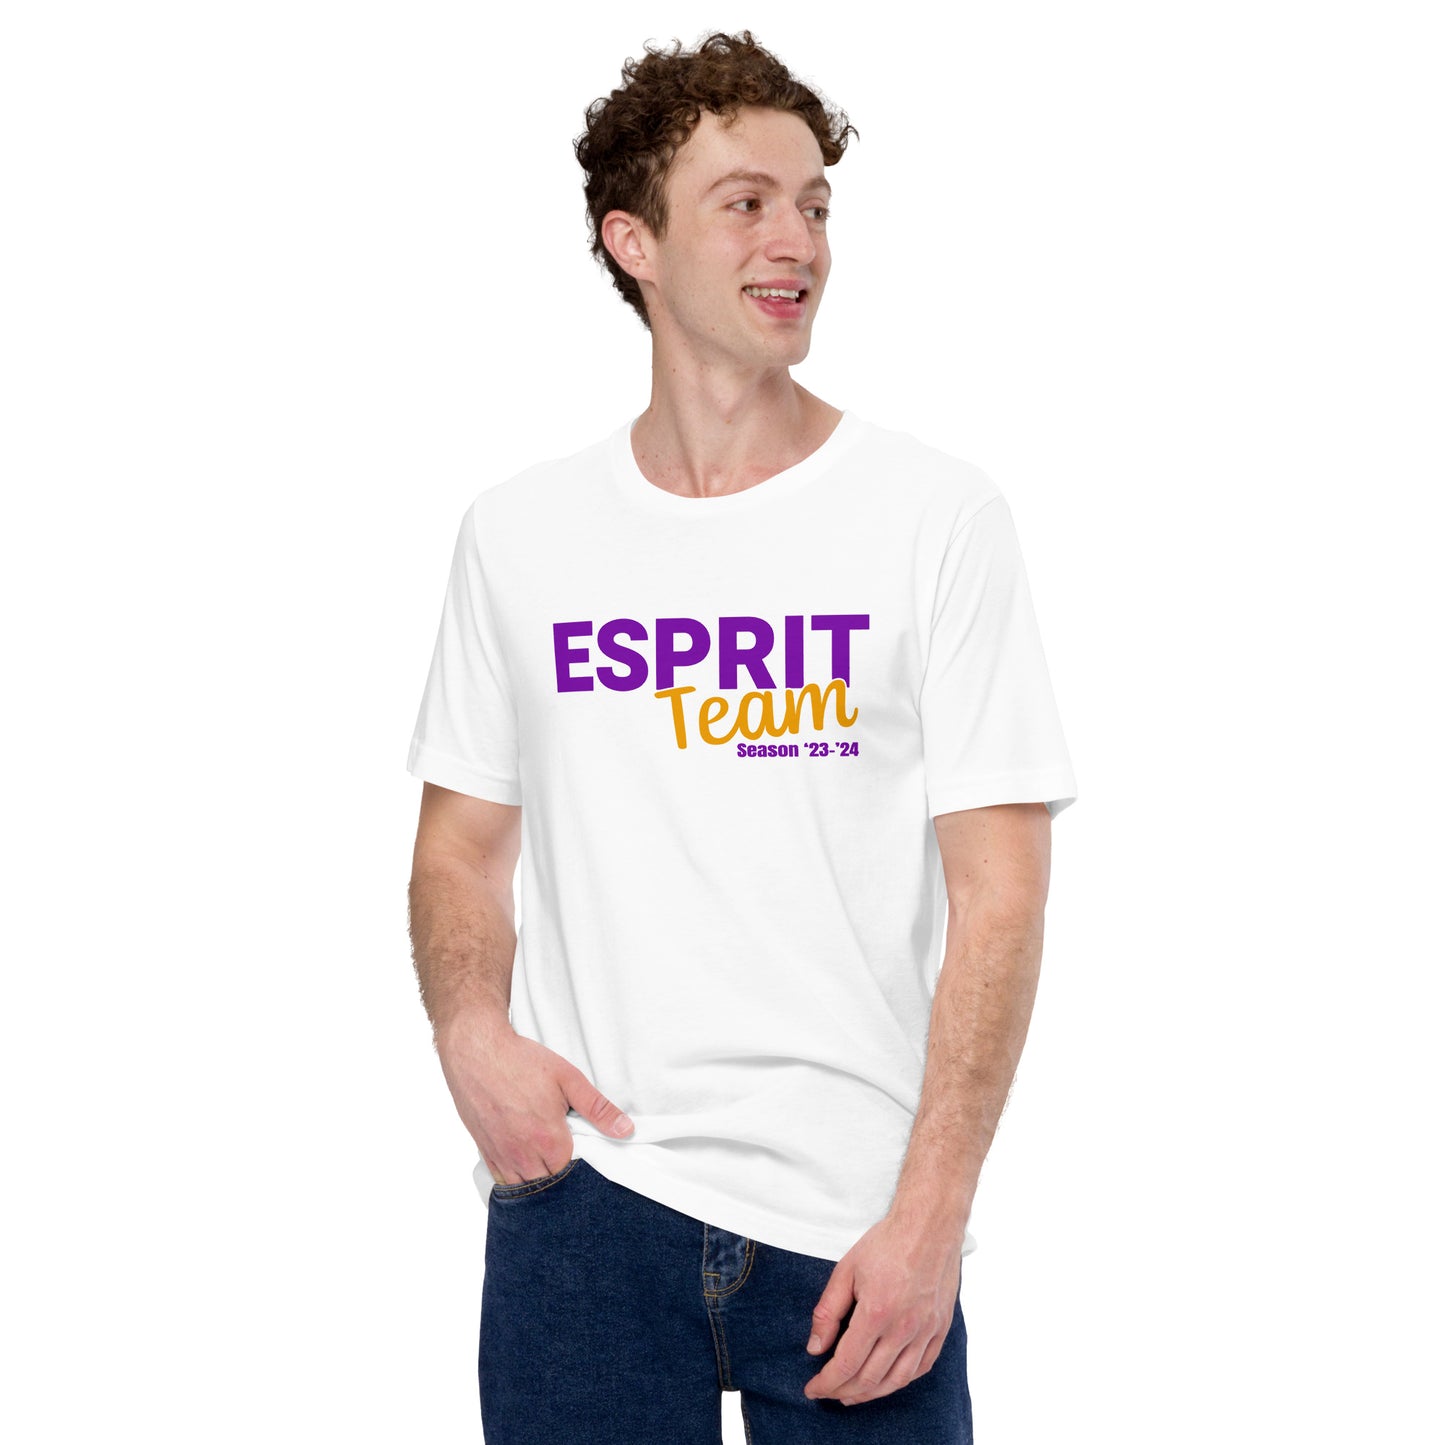 Esprit Team Season 23'-24' Adult T-shirt